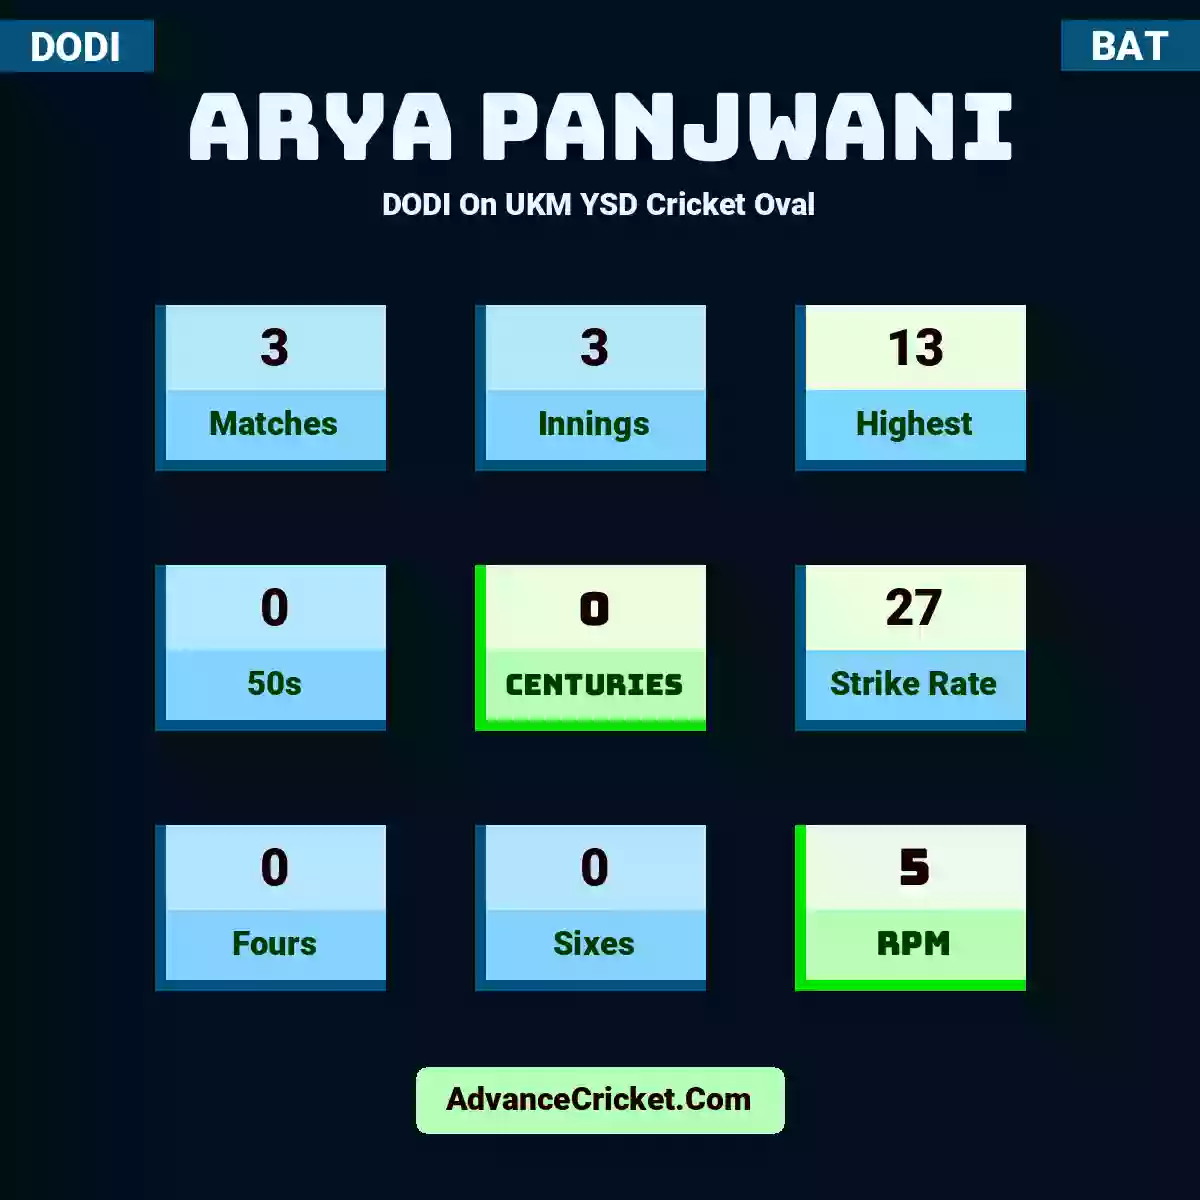 Arya Panjwani DODI  On UKM YSD Cricket Oval, Arya Panjwani played 3 matches, scored 13 runs as highest, 0 half-centuries, and 0 centuries, with a strike rate of 27. A.Panjwani hit 0 fours and 0 sixes, with an RPM of 5.